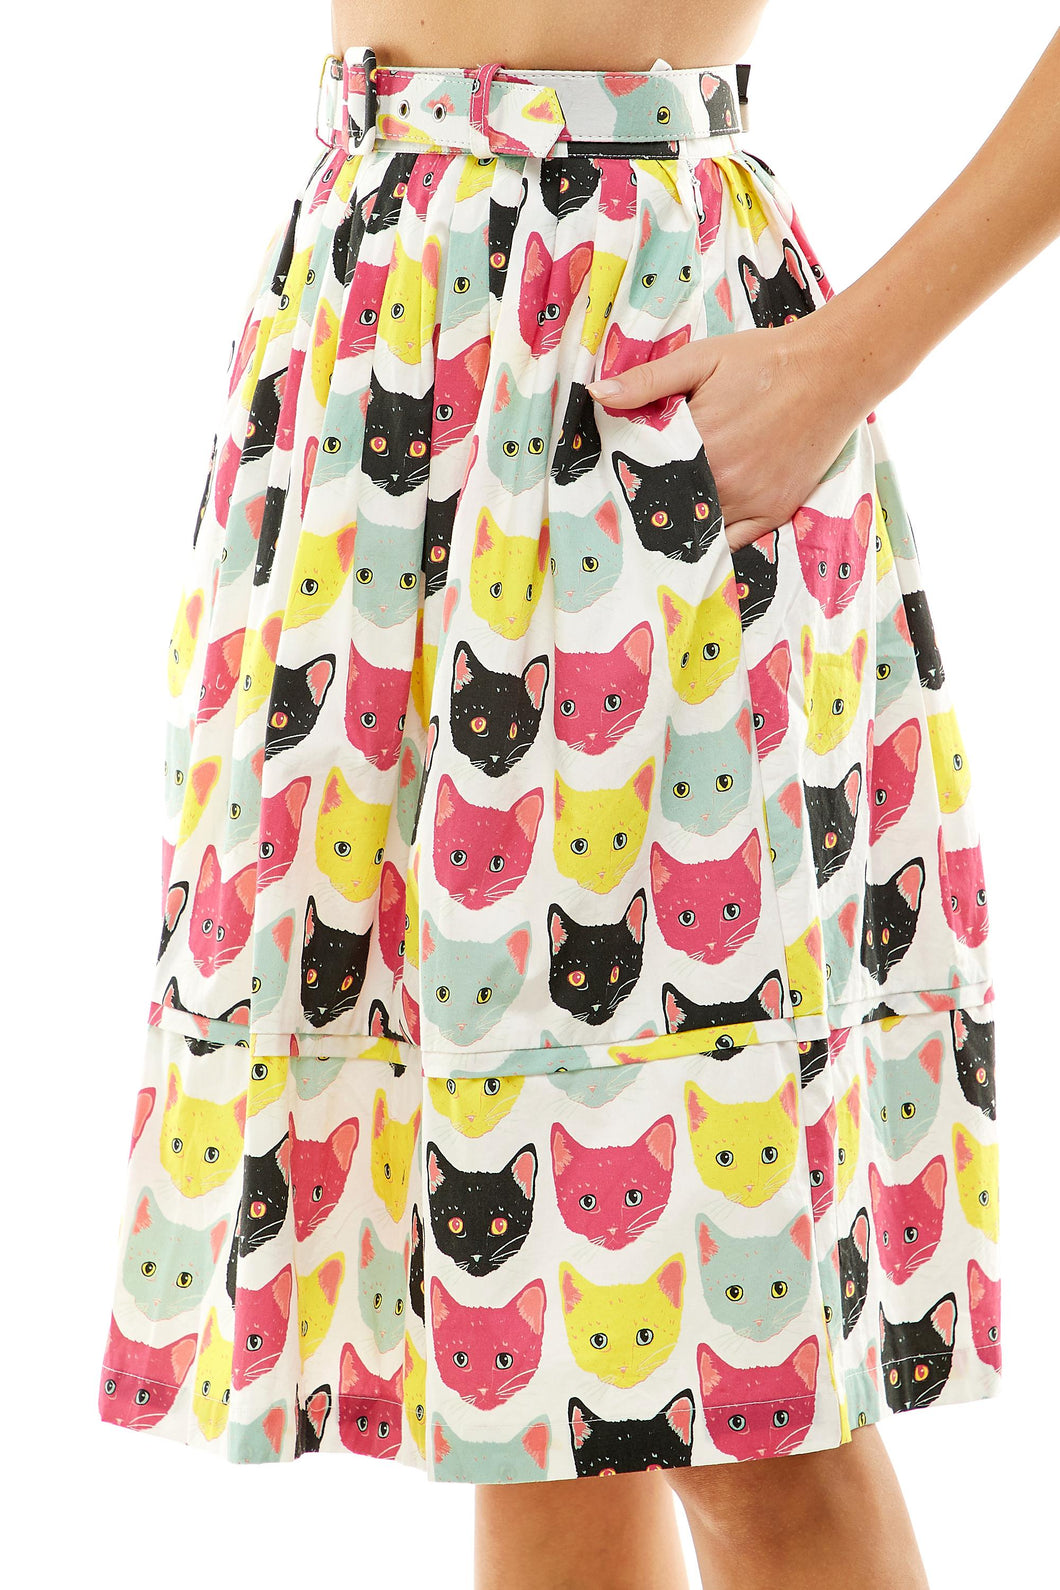 Siri Skirt in Meow Meow